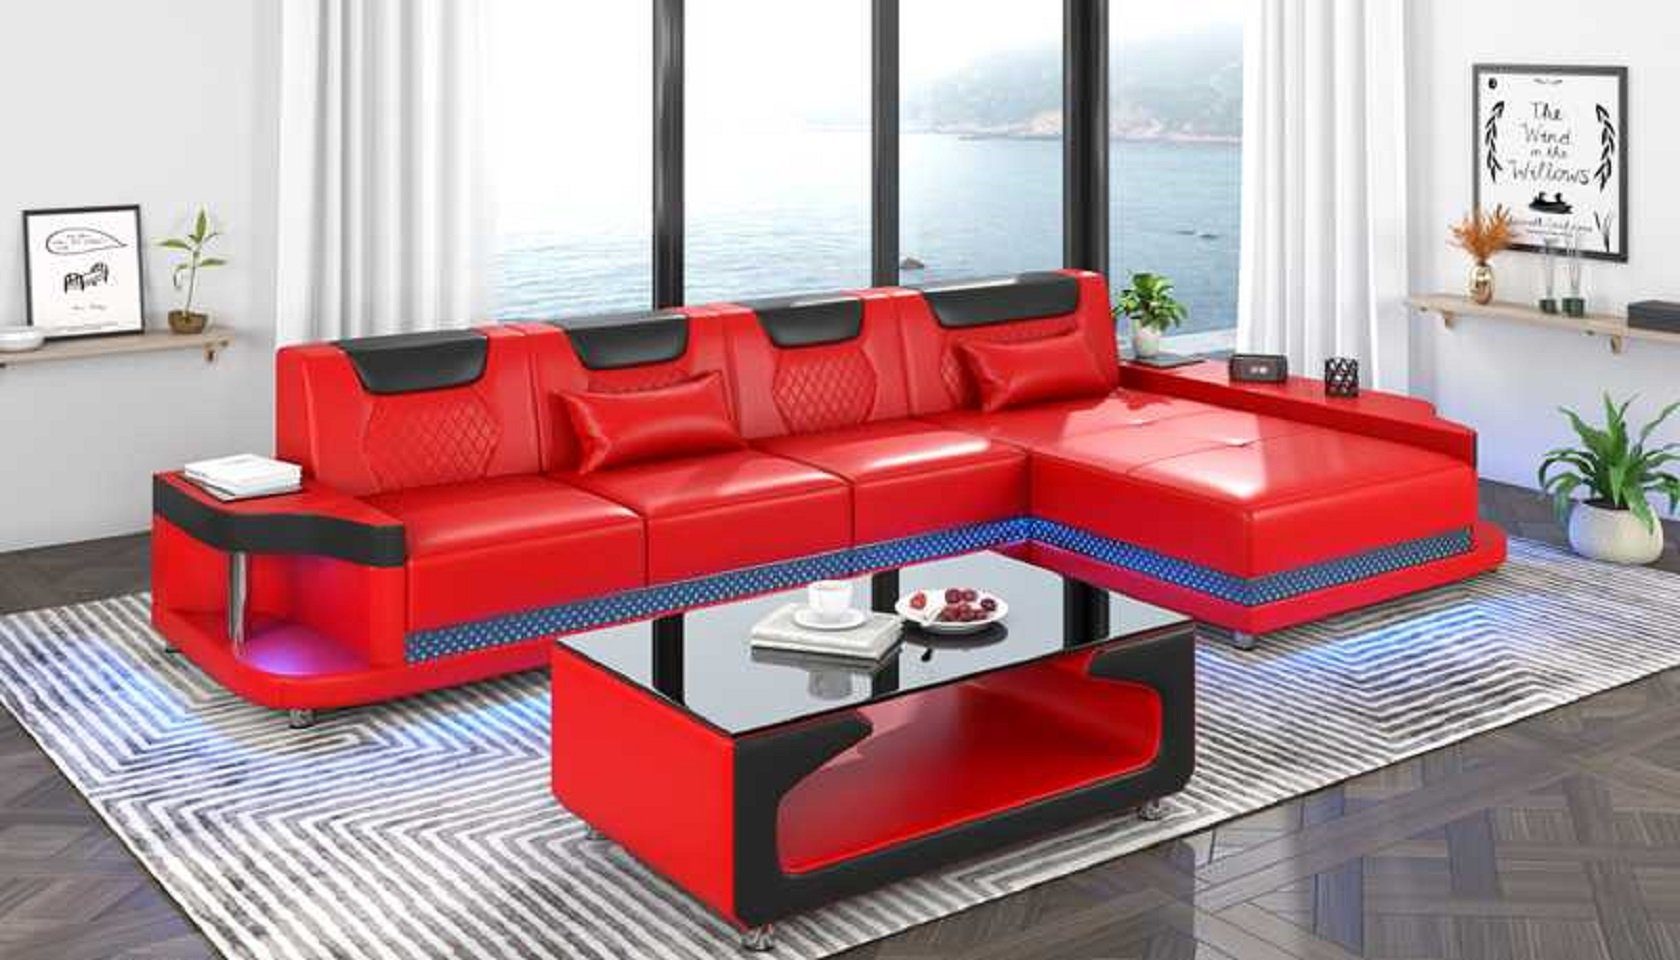 Ecksofa Made Sofa Schicker L Ecksofa Couch Europe Grau Form Luxus Teile, JVmoebel Rot Moderne in 3 Couchen,